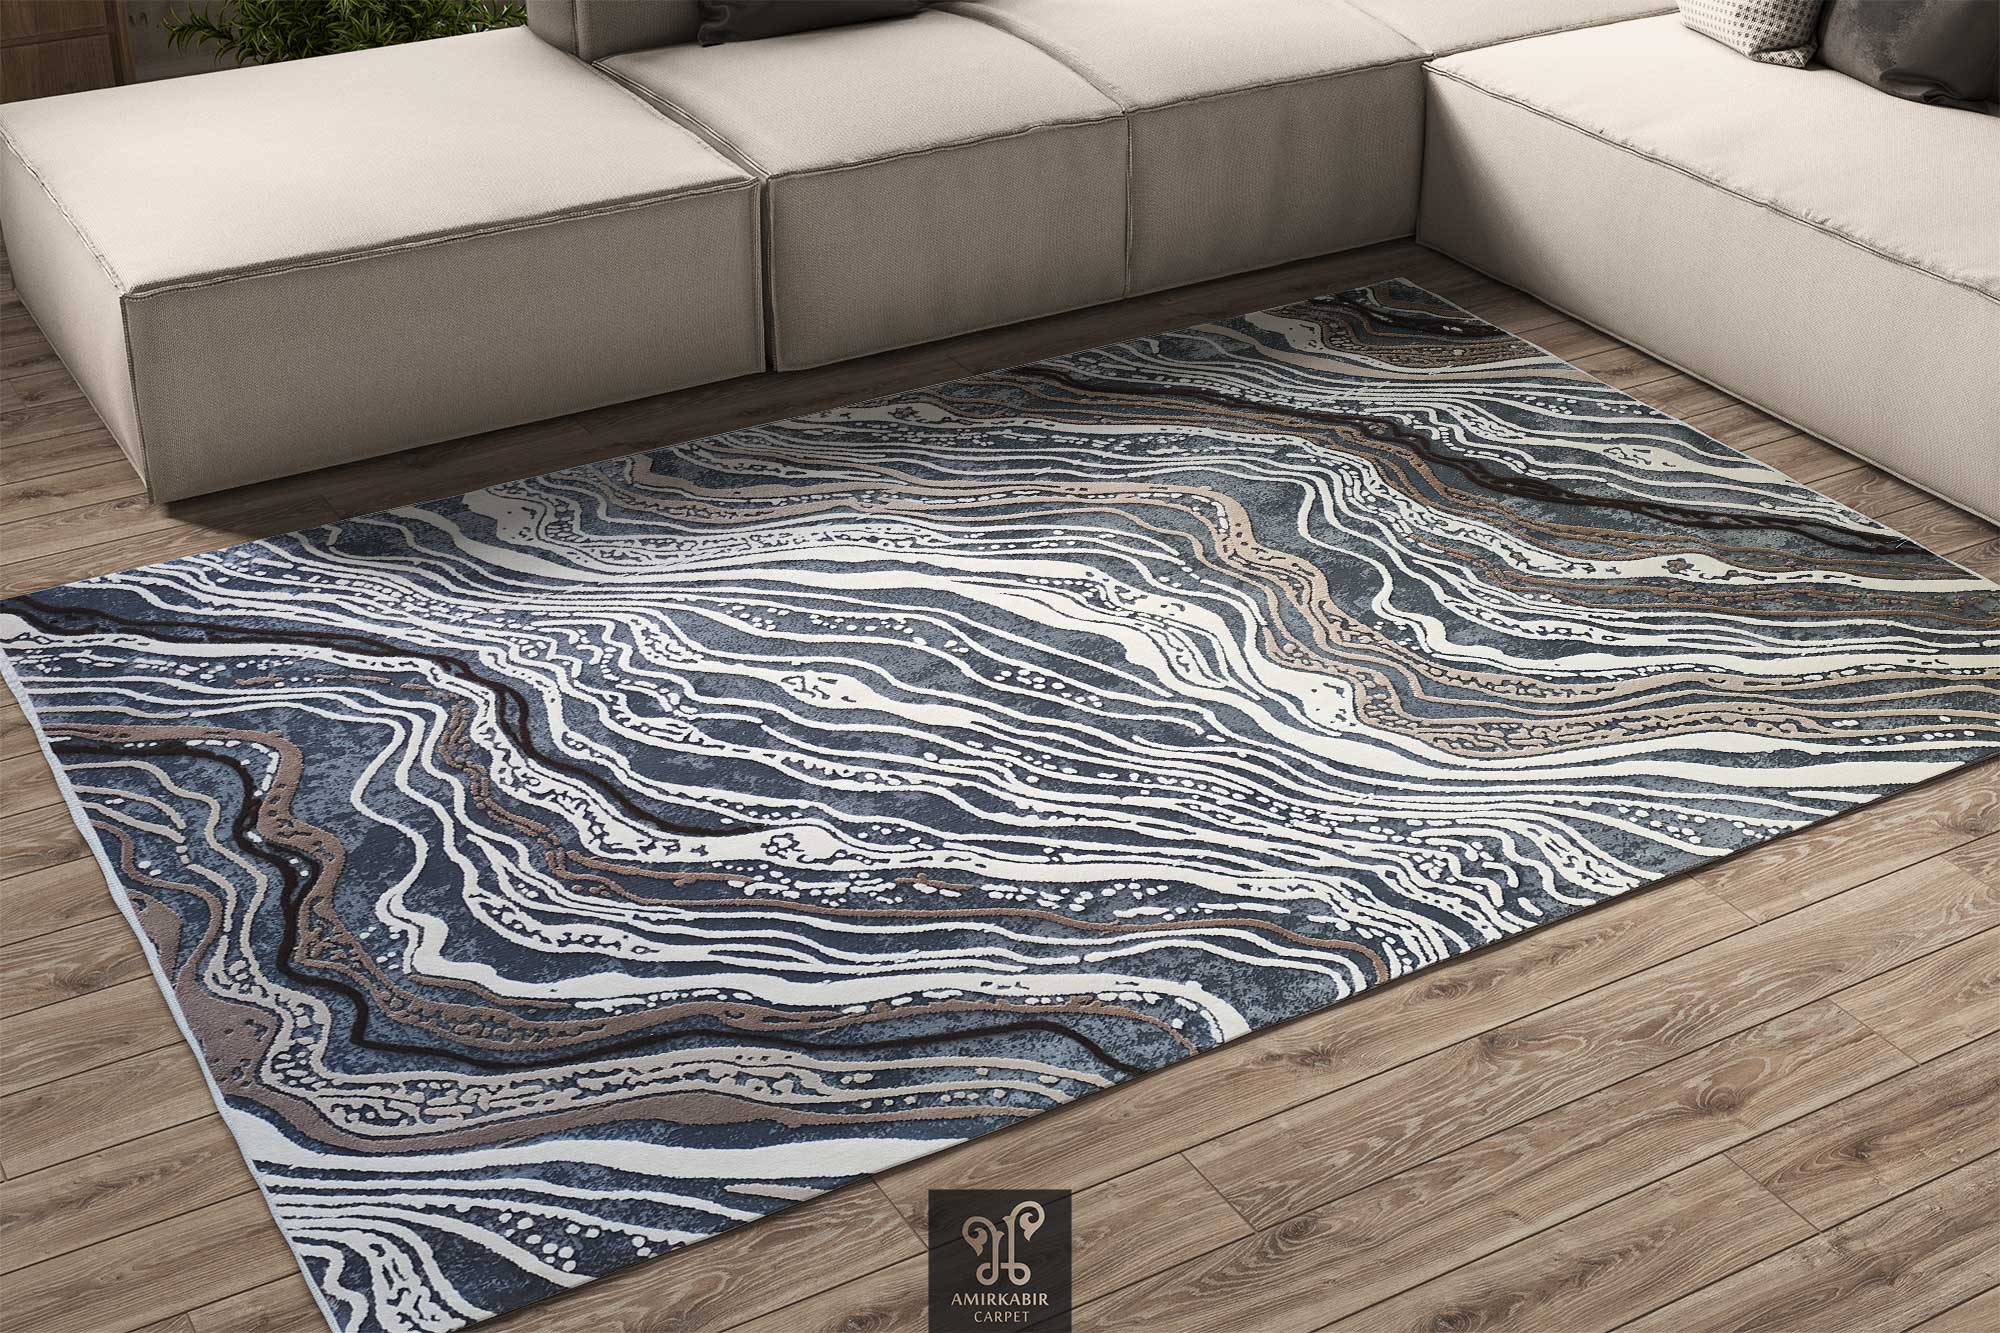 Vintage 400 reeds carpet -1400 Density RUG - Modern Carpet - Harmony Carpet 1126